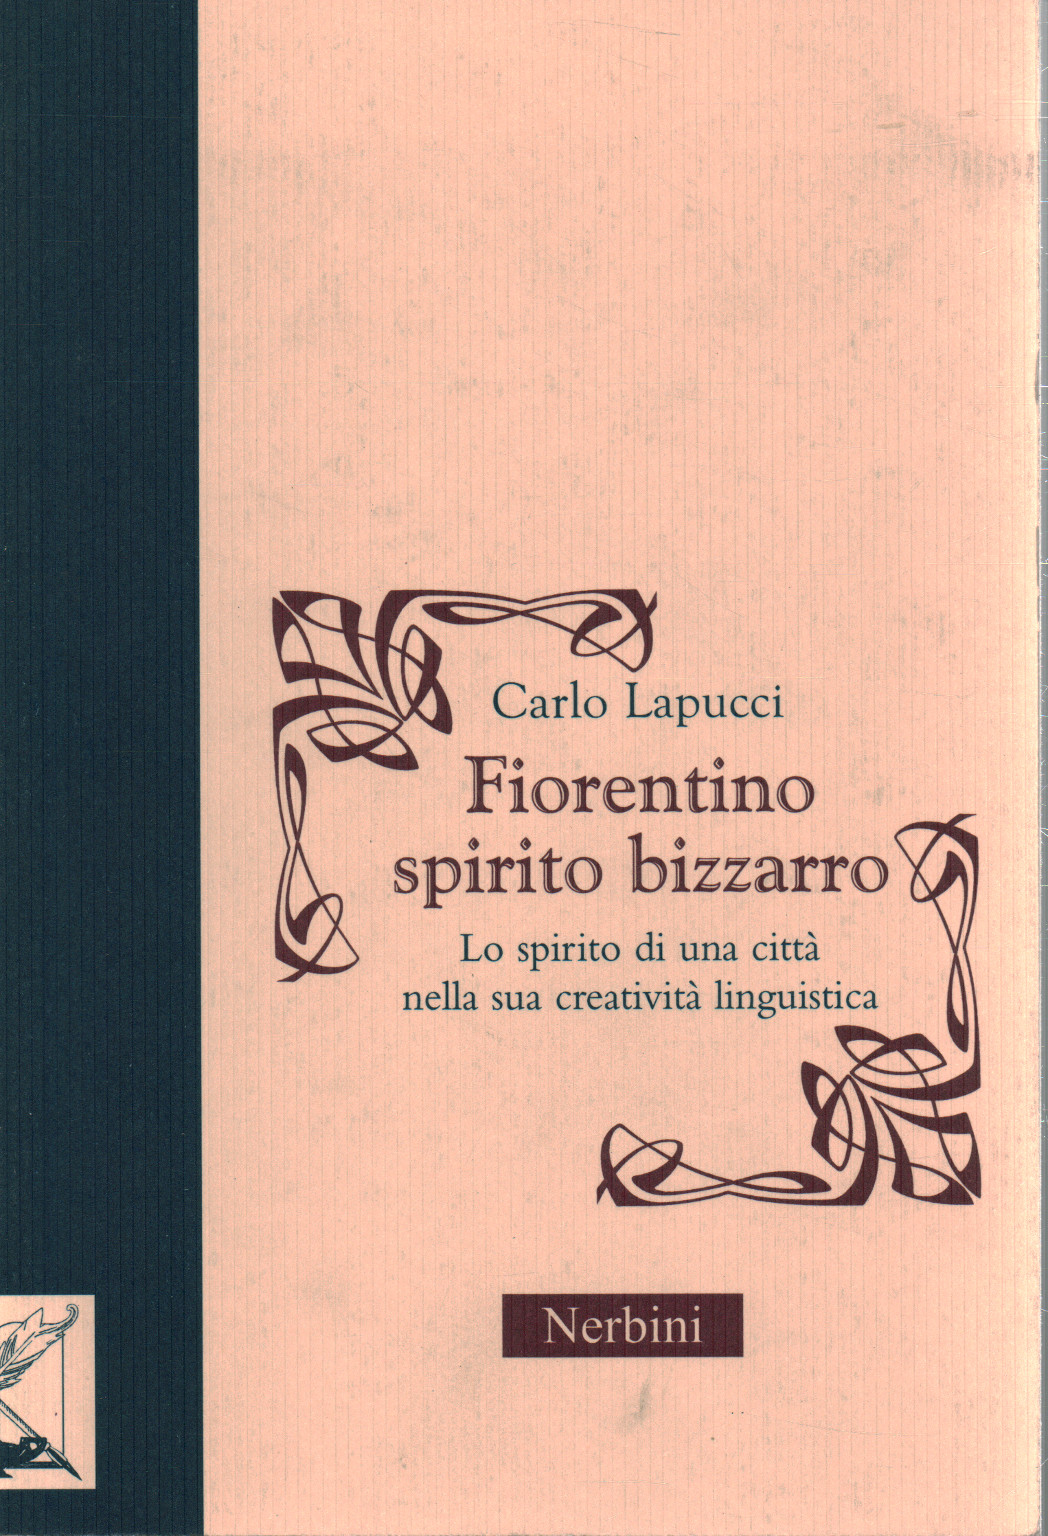 The florentine spirit of the bizarre, s.a.